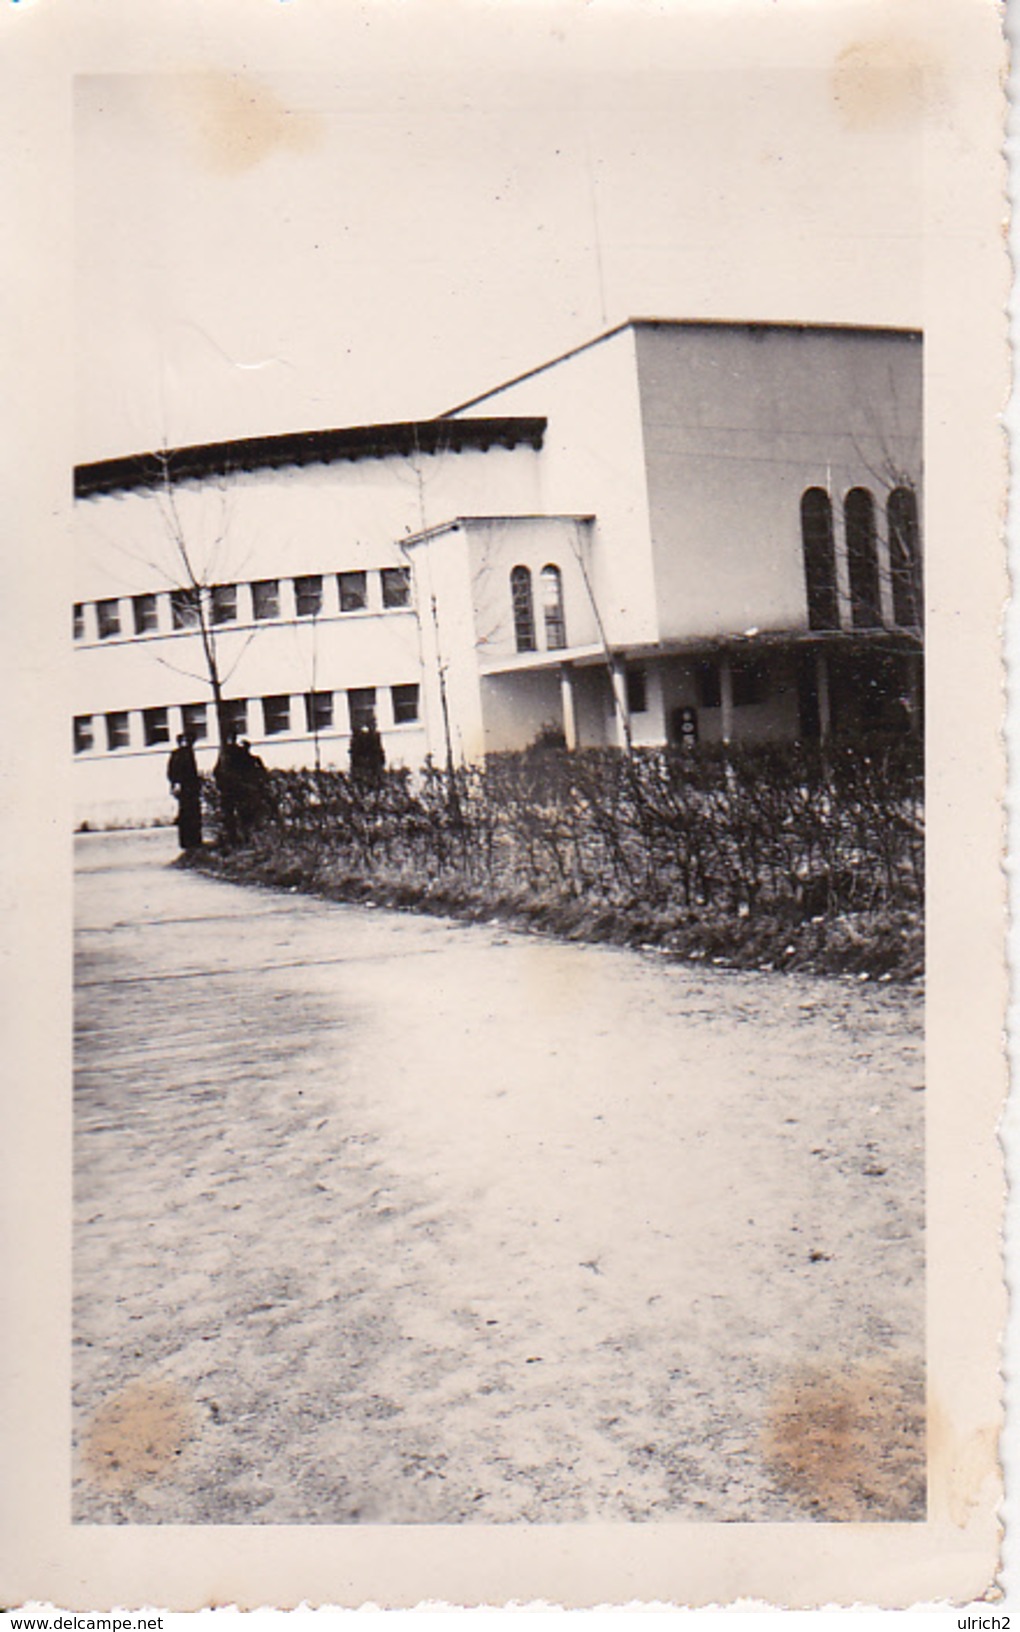 Foto Bulgarien - Gebäude (Kaserne?) -  Ca. 1940 - 10*6cm  (27614) - Orte